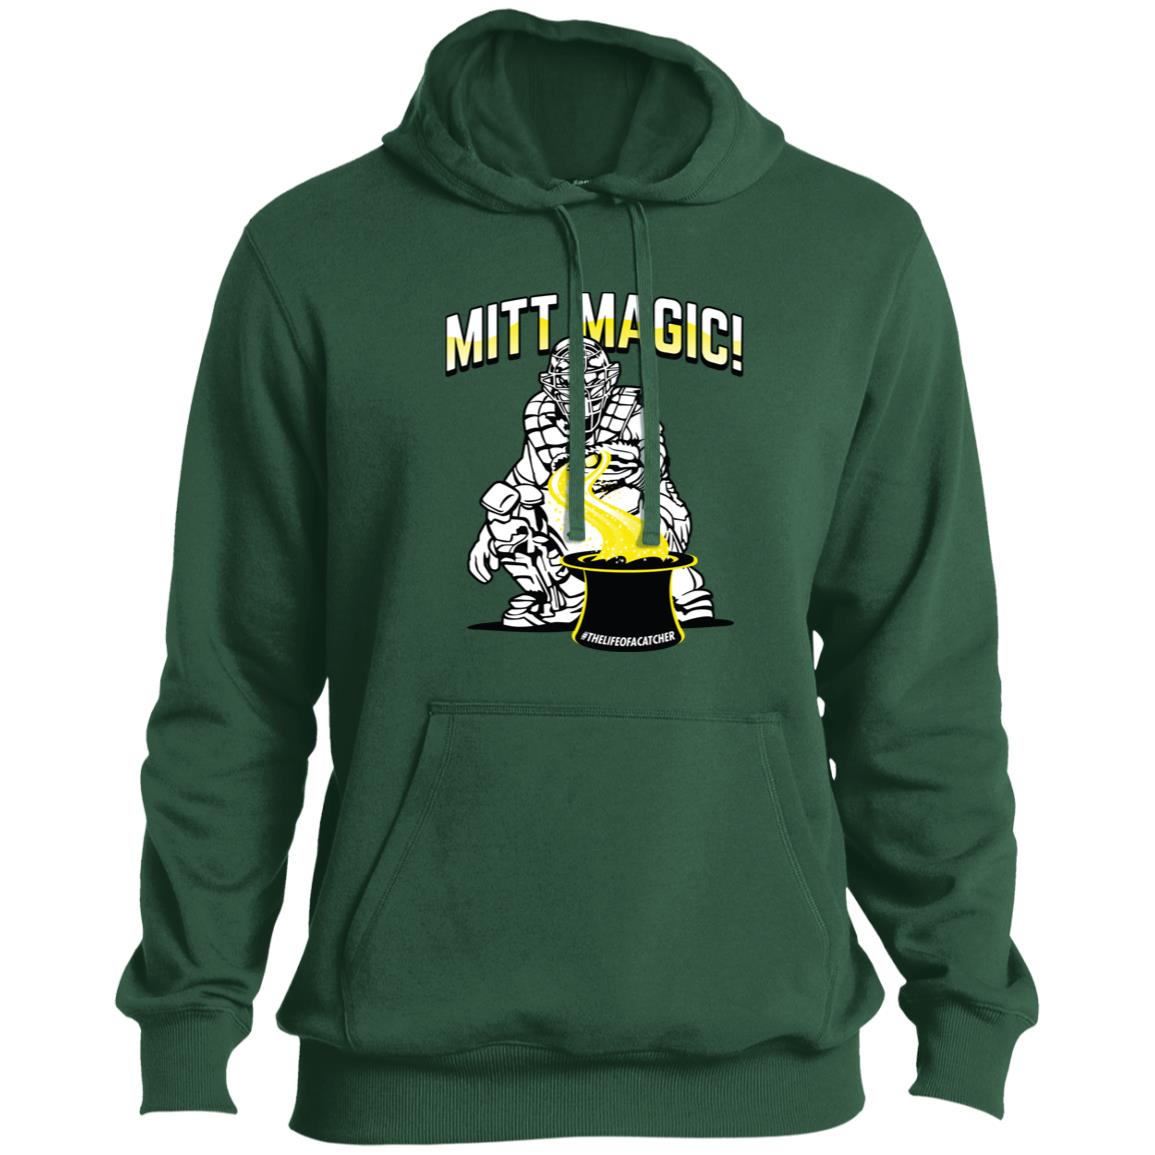 The Catching Guy Mitt Magic Pullover Hoodie green